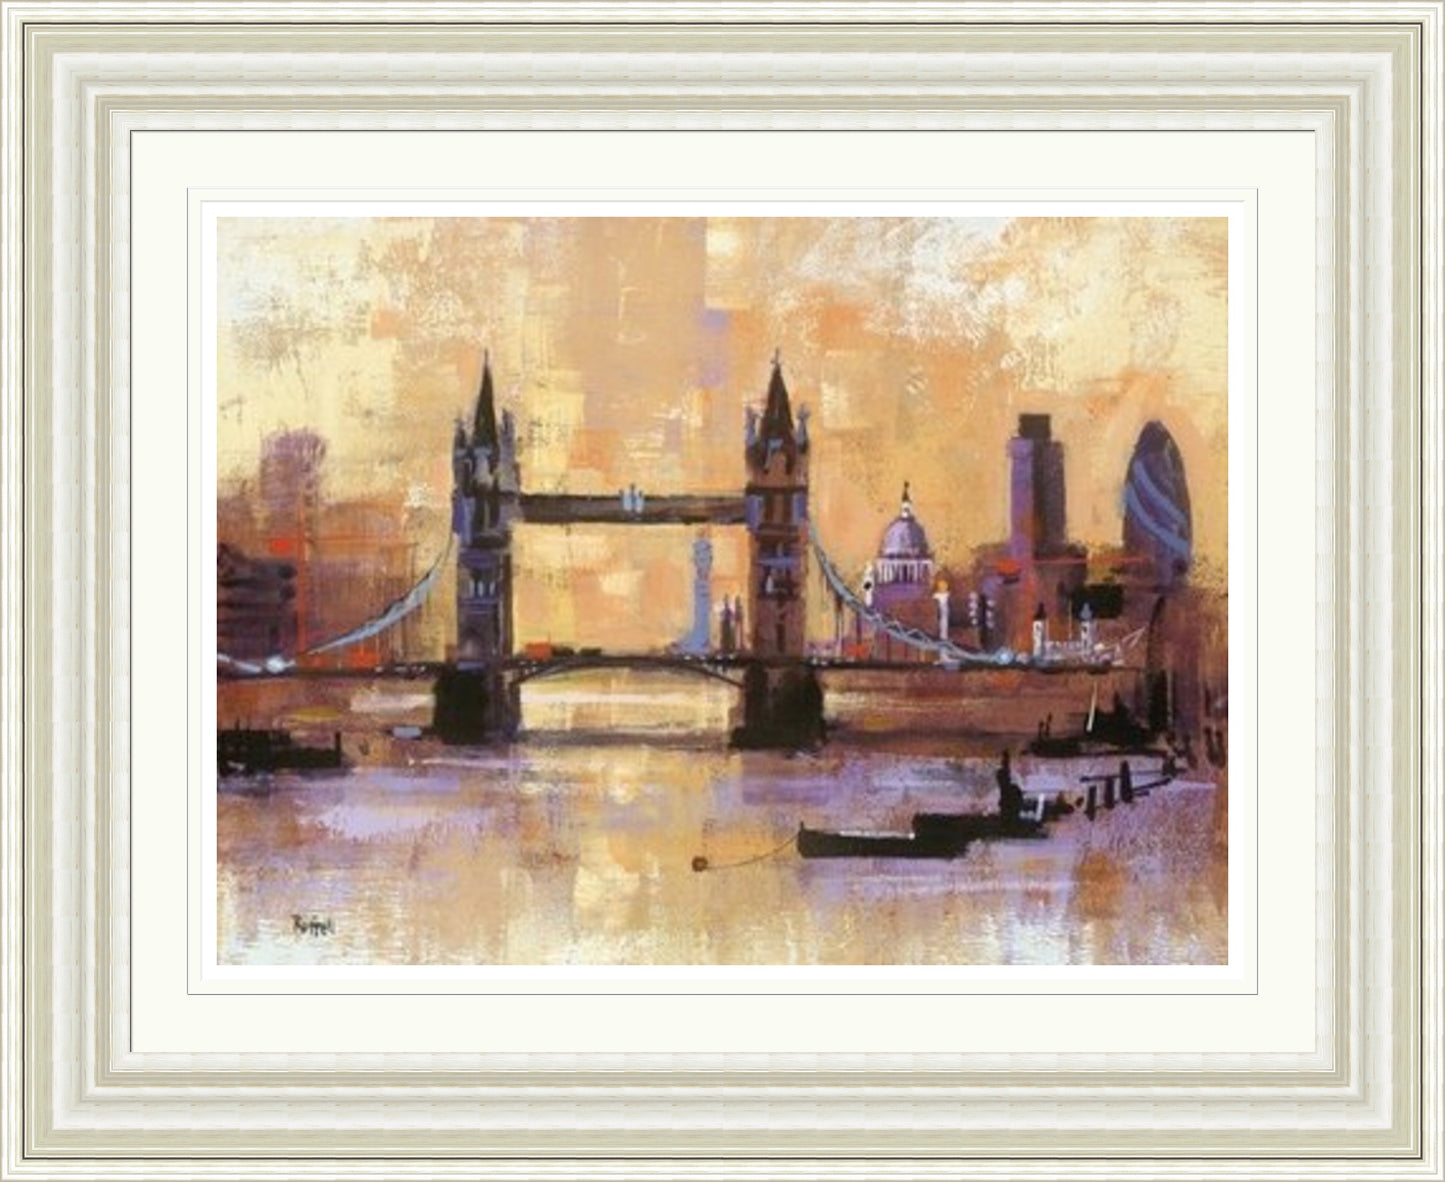 Tower Bridge, London by Colin Ruffell